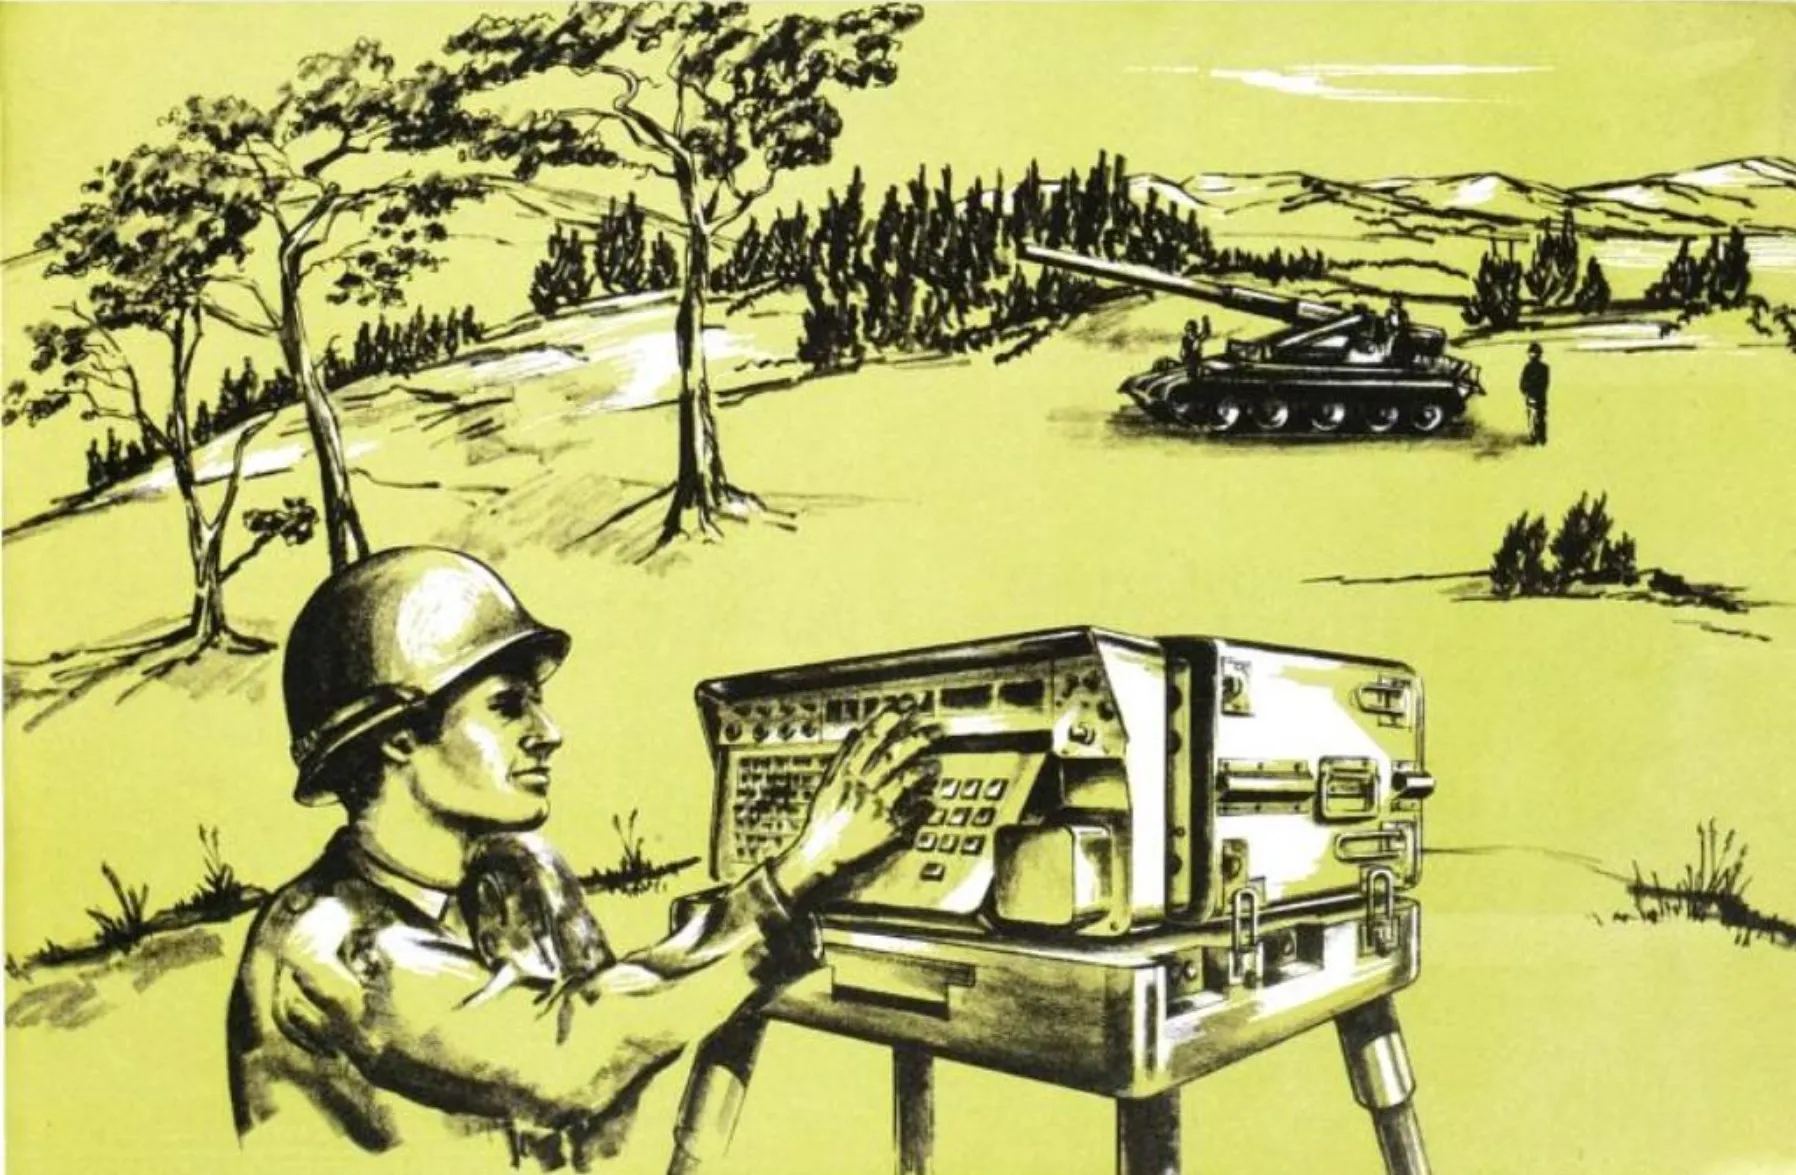 Stylized image of soldier using FADAC